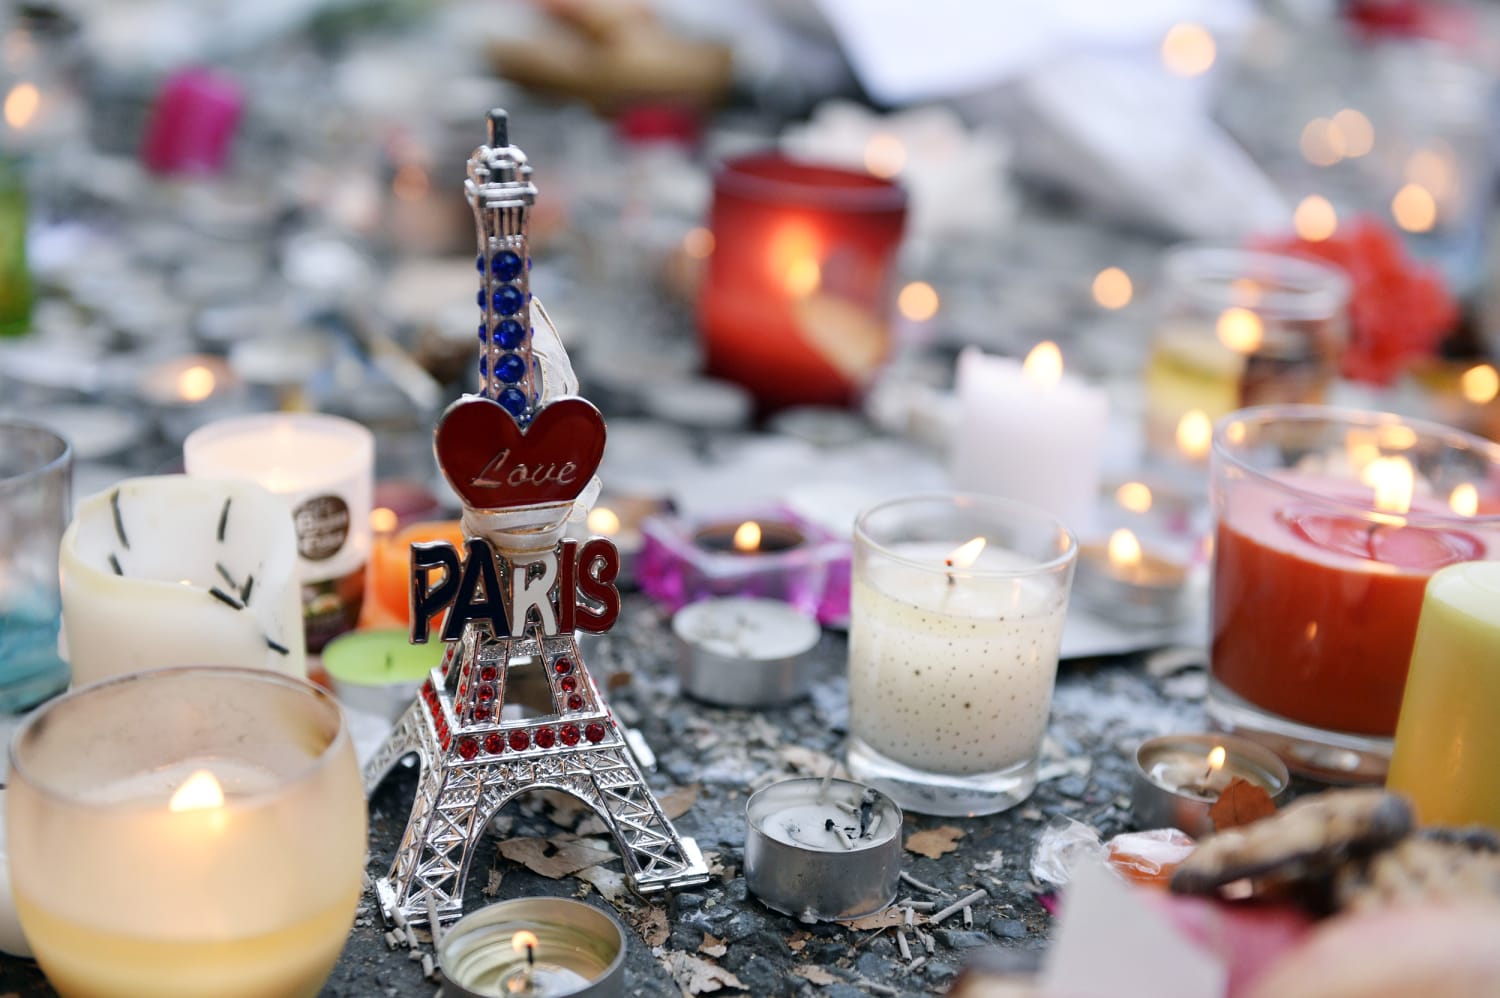 Follow Live Latest Updates on Paris Attacks